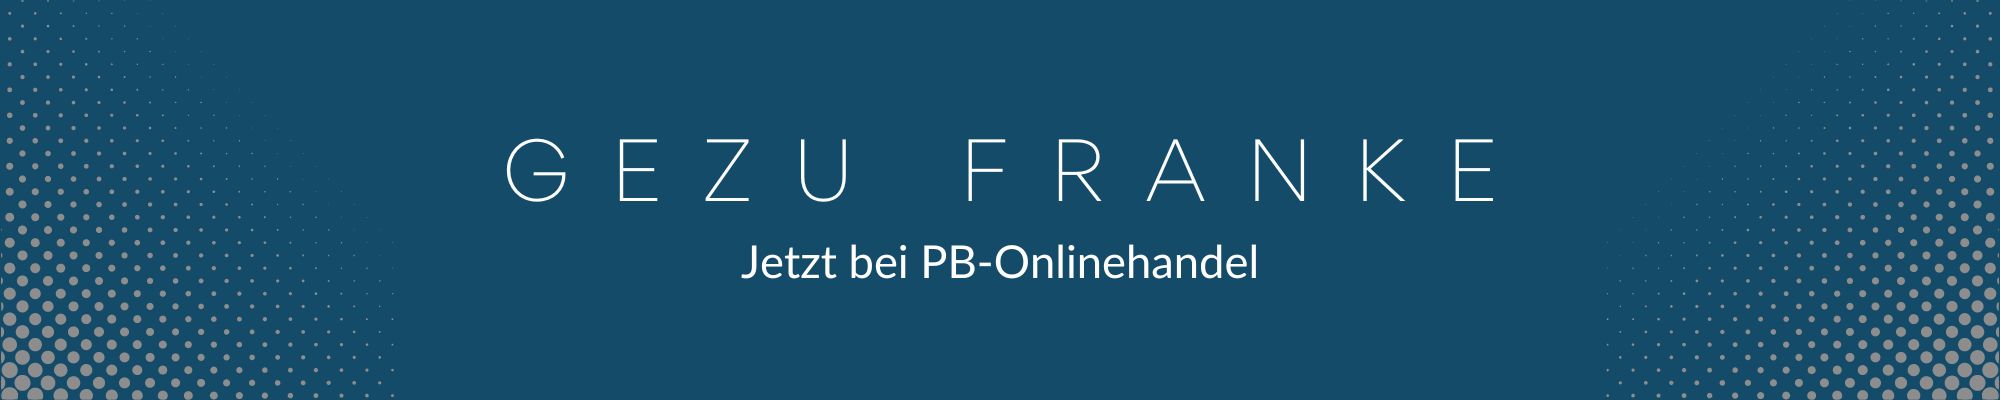 GEZU Franke bei PB-Onlinehandel